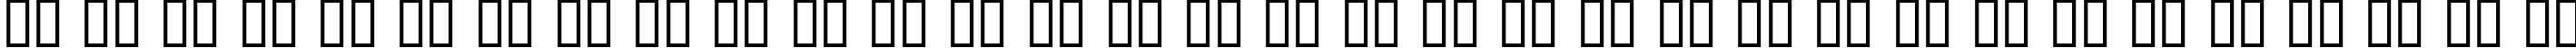 Пример написания русского алфавита шрифтом Akbar Plain